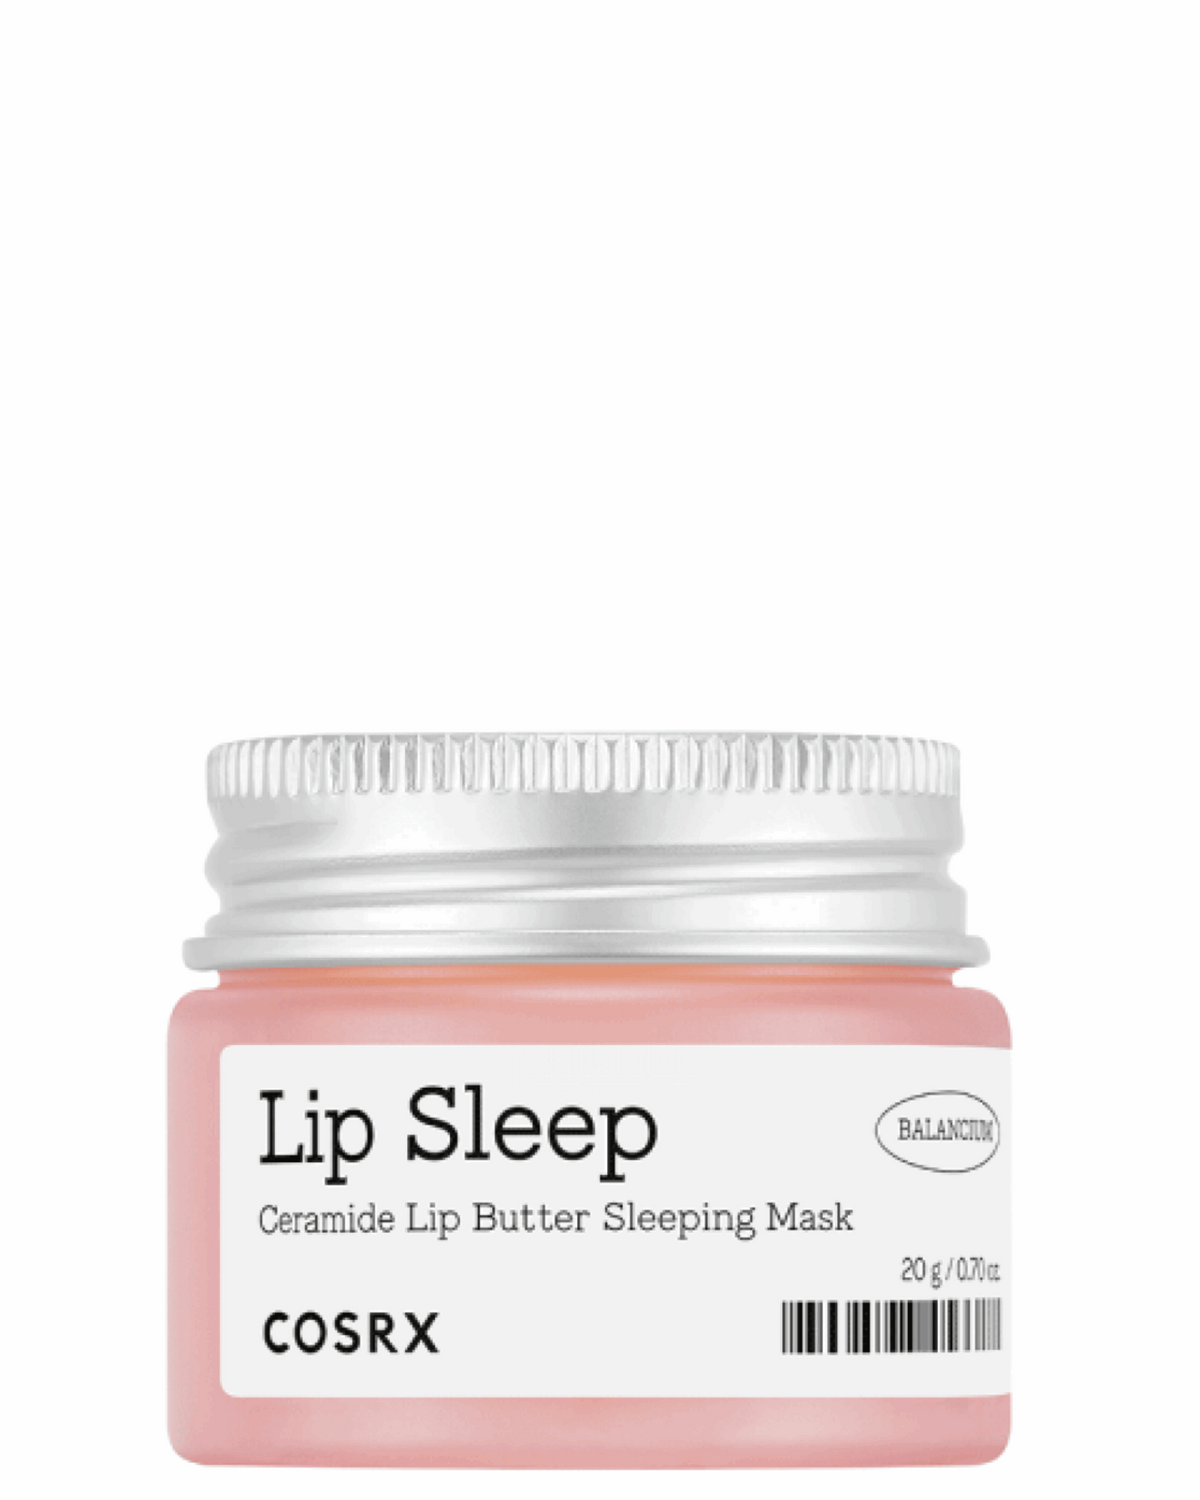 COSRX LIP SLEEP / CERAMIDE LIP BUTTER SLEEPING MASK